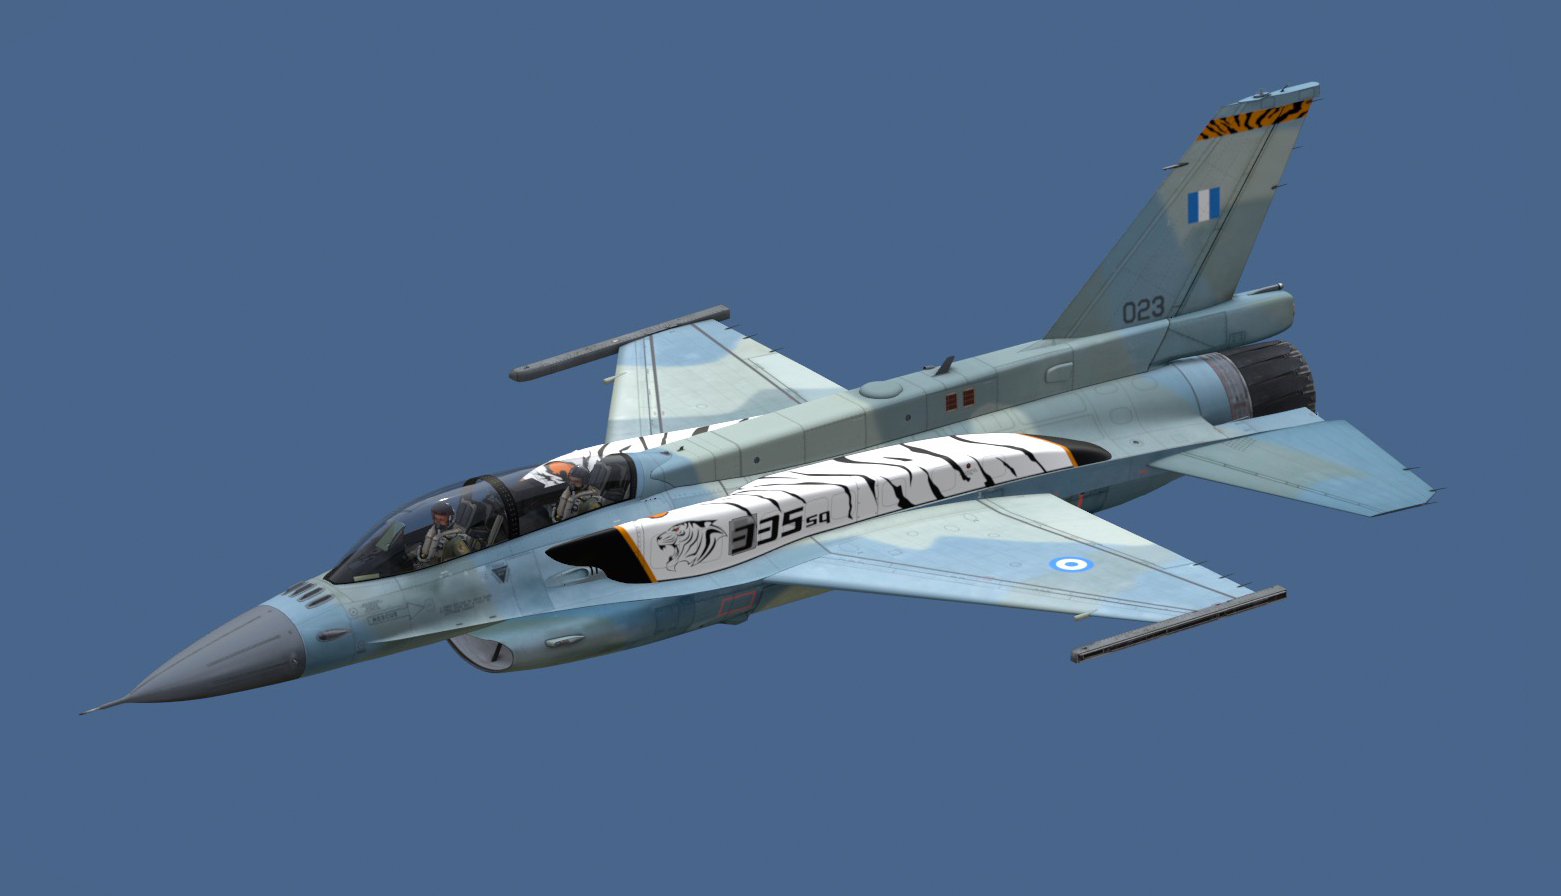 Hellenic Air Force F-16D 335 Tiger Squadron